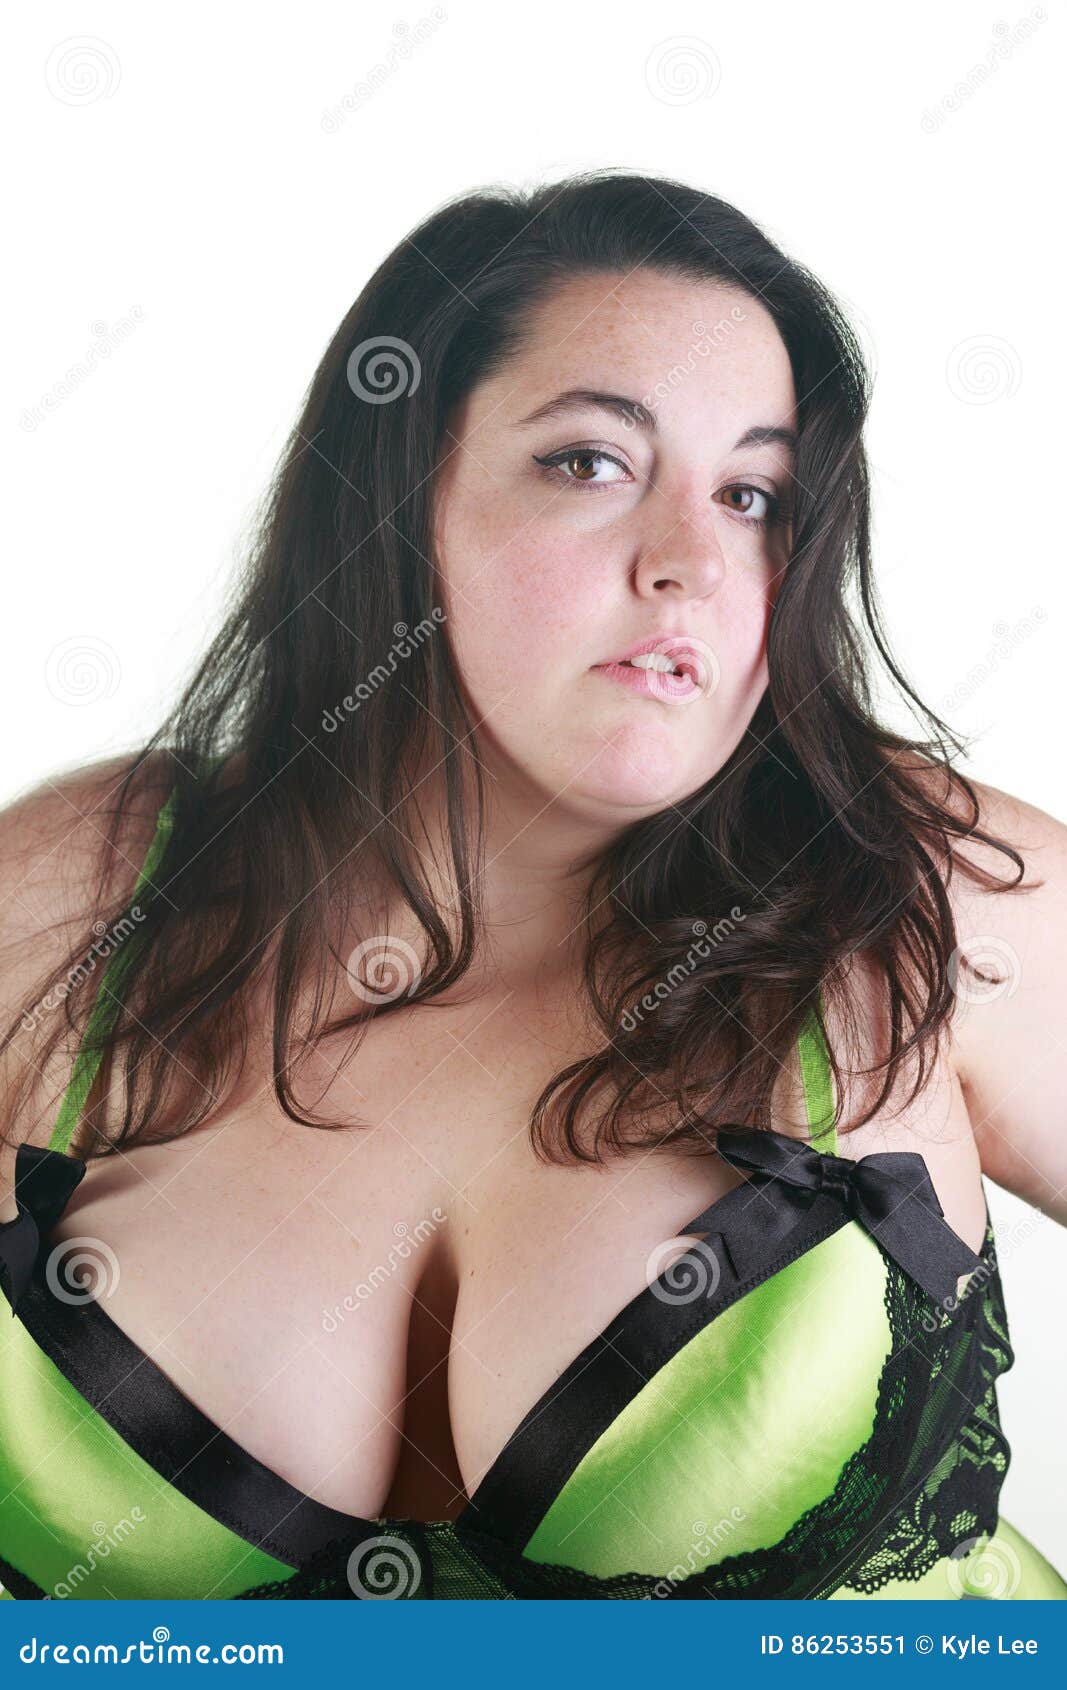 Plus Size Woman Posing in the Studio Stock Image